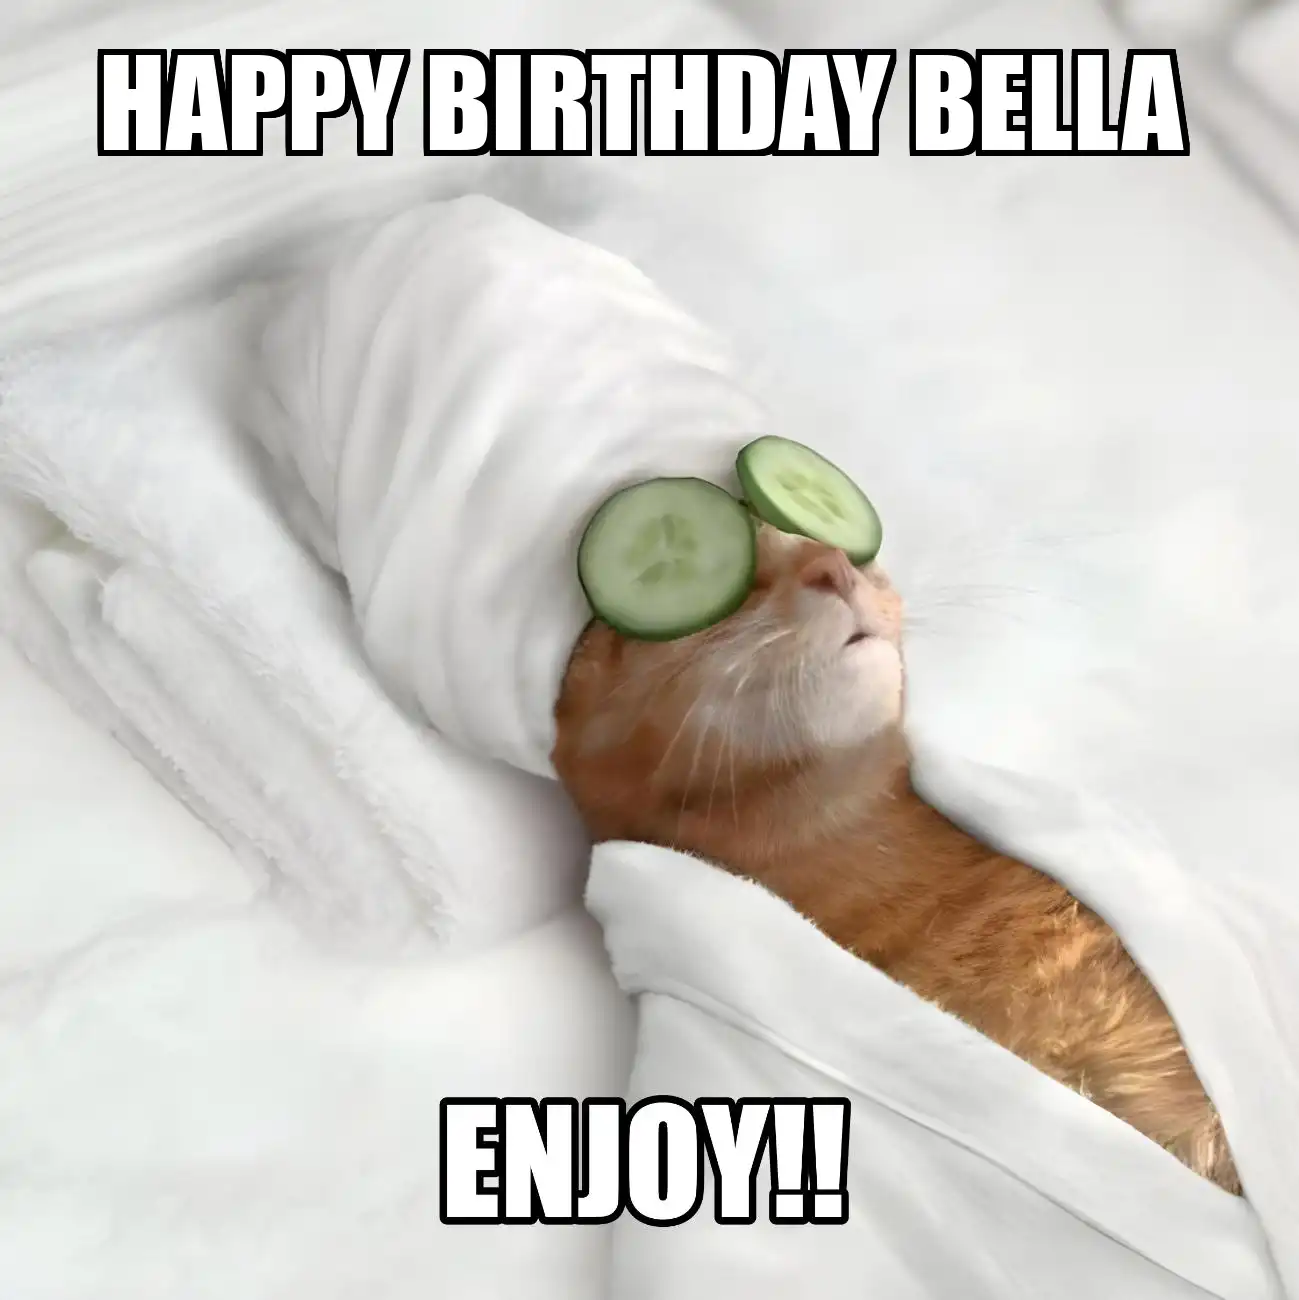 Happy Birthday Bella Enjoy Cat Meme